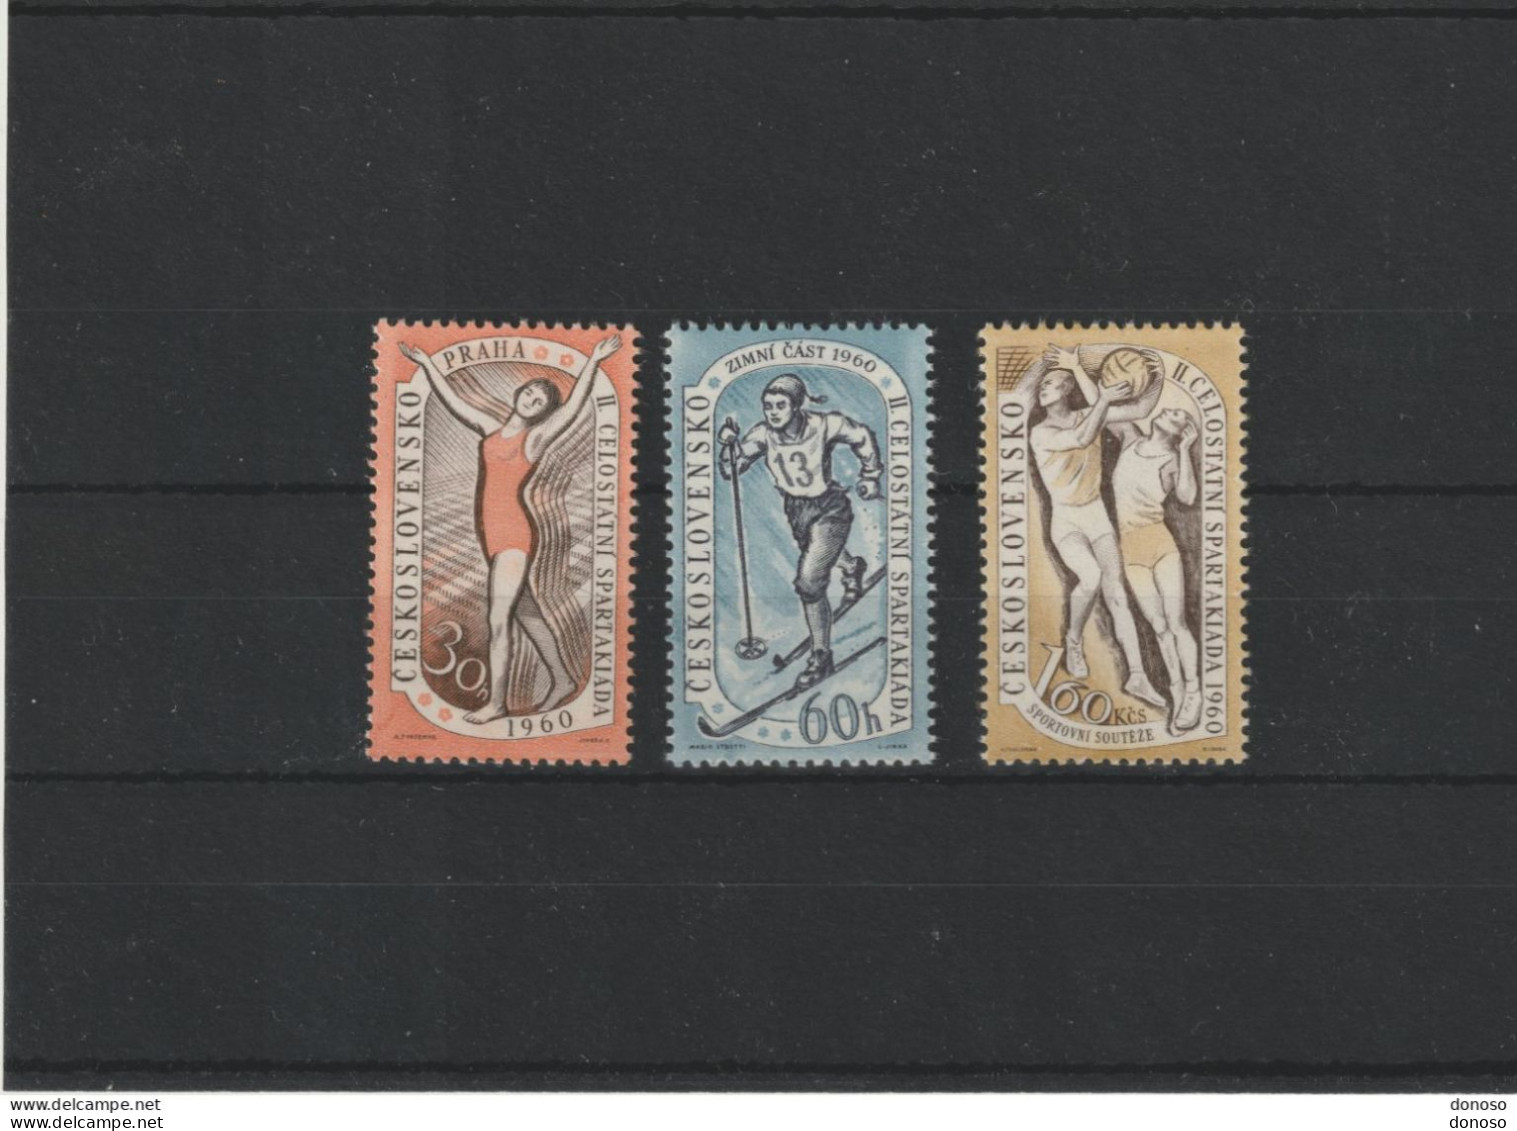 TCHECOSLOVAQUIE 1960 Gymnastique, Ski, Basket-ball Yvert 1059-1061, Michel 1176-1178 NEUF** MNH Cote 4,50 Euros - Unused Stamps